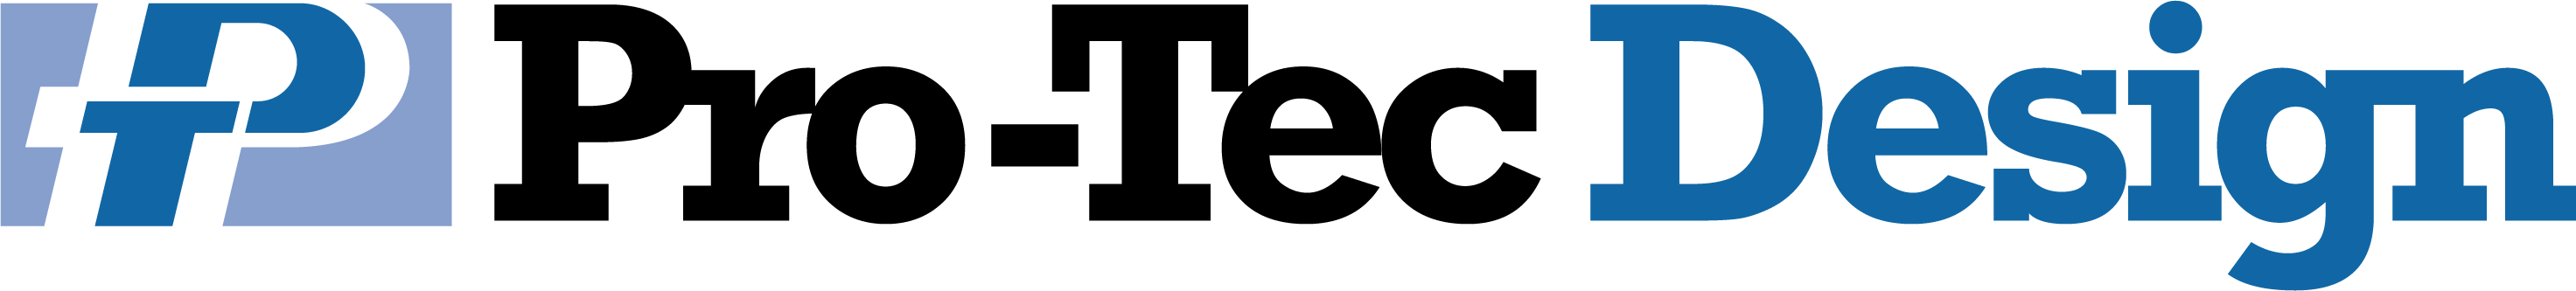 Pro-Tec Design Company Logo